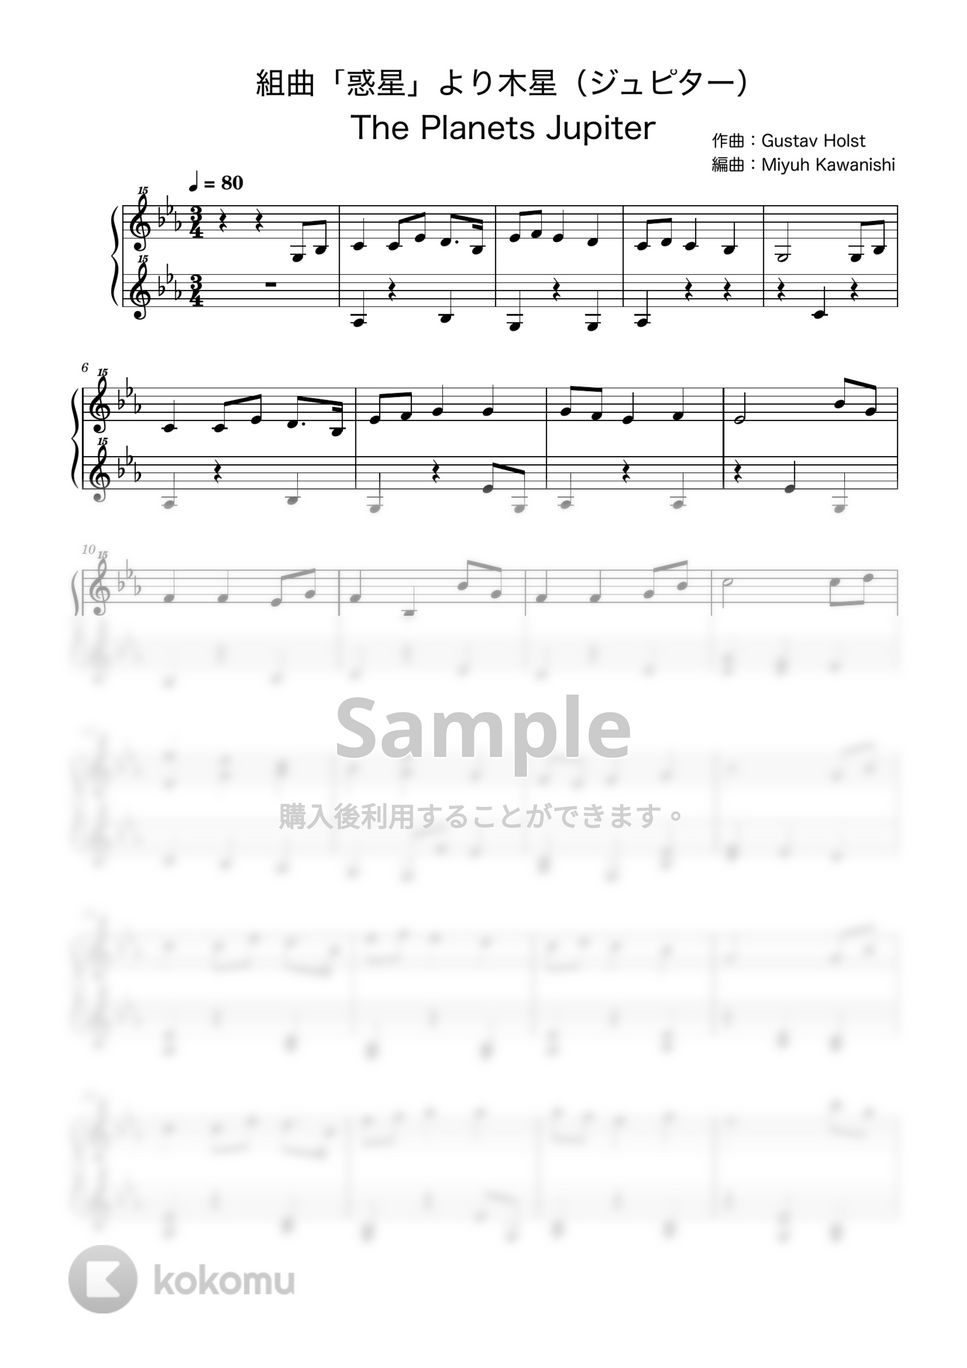 Gustav Holst - 組曲「惑星」より木星（ジュピター） (トイピアノ / クラシック / 32鍵盤) by 川西三裕